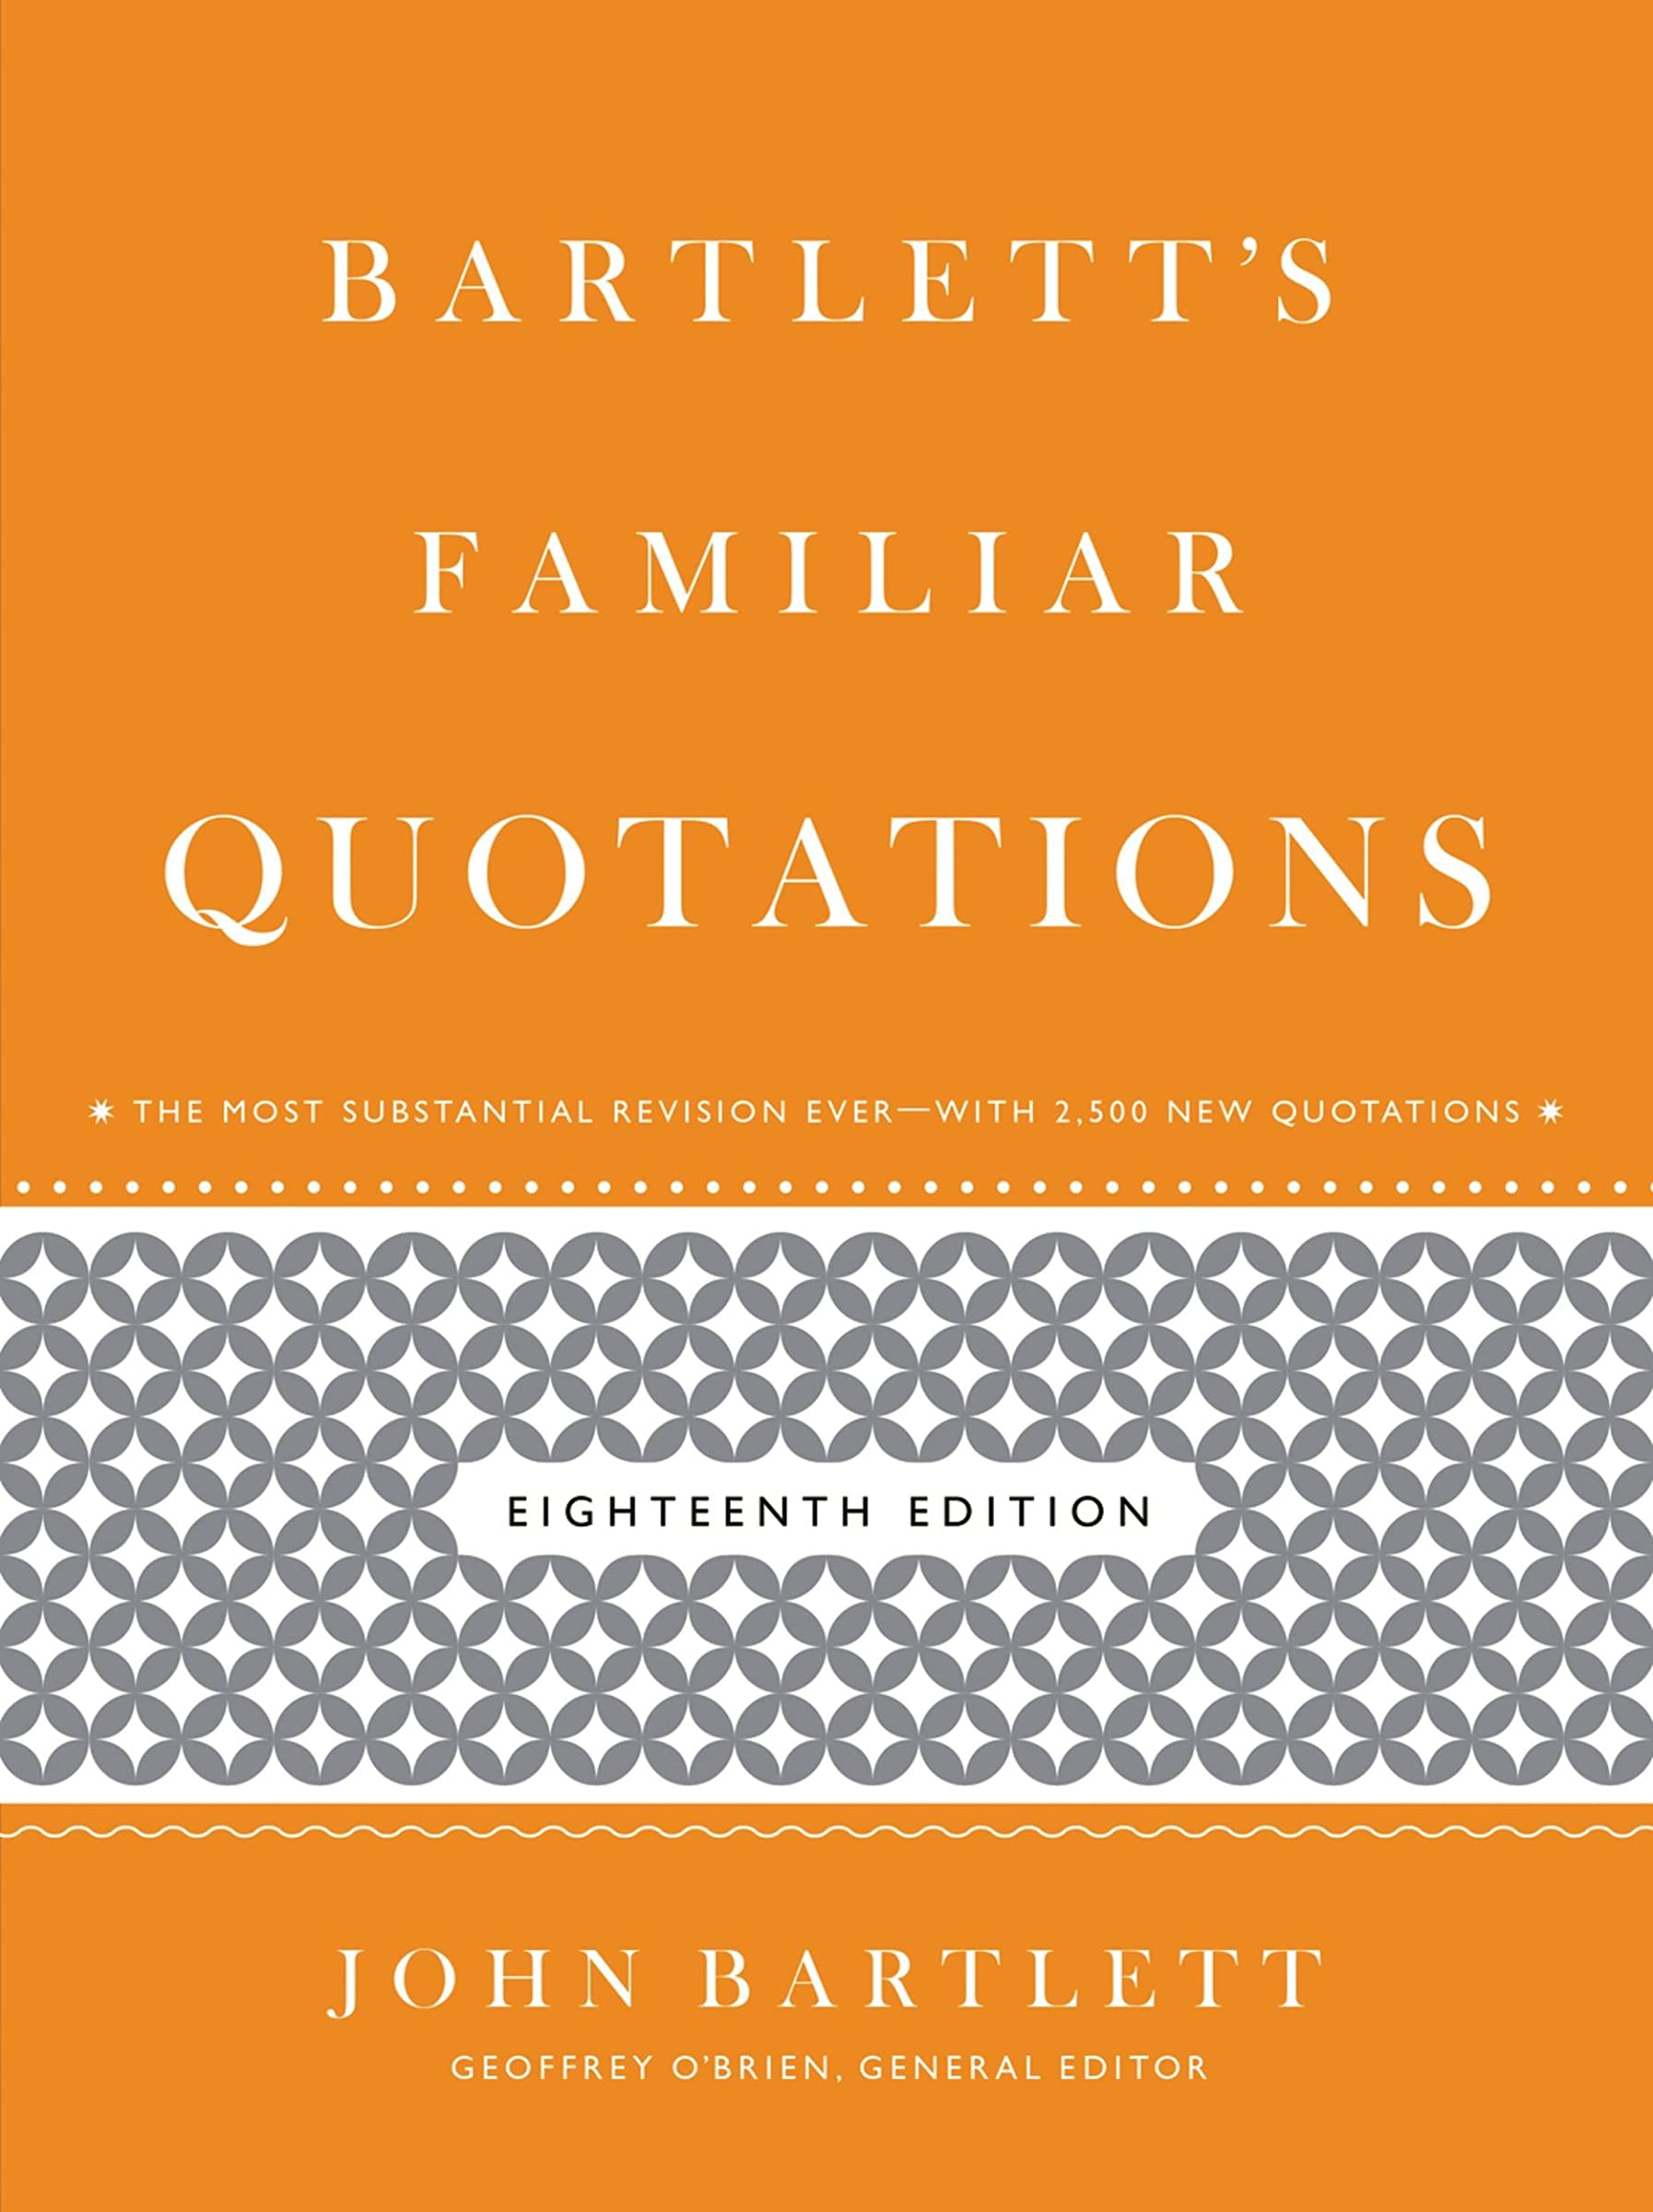 Bartlett's Familiar Quotations 18th Edition, (Kindle eBook) $4.99